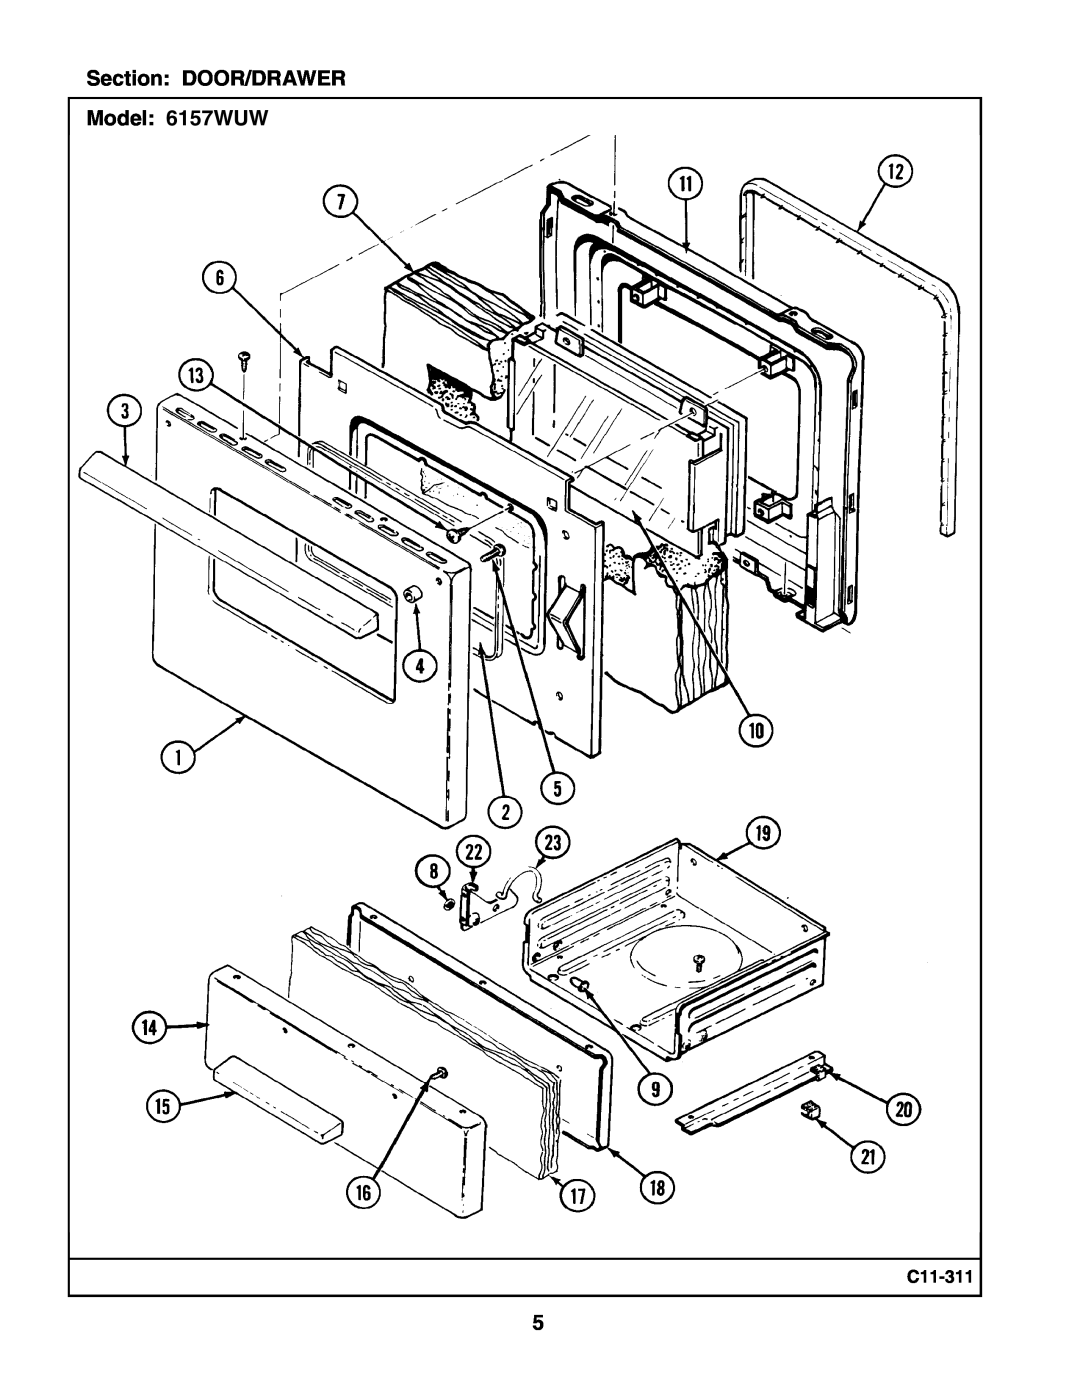 Whirlpool manual Section DOOR/DRAWER Model 6157WUW, C11-311 